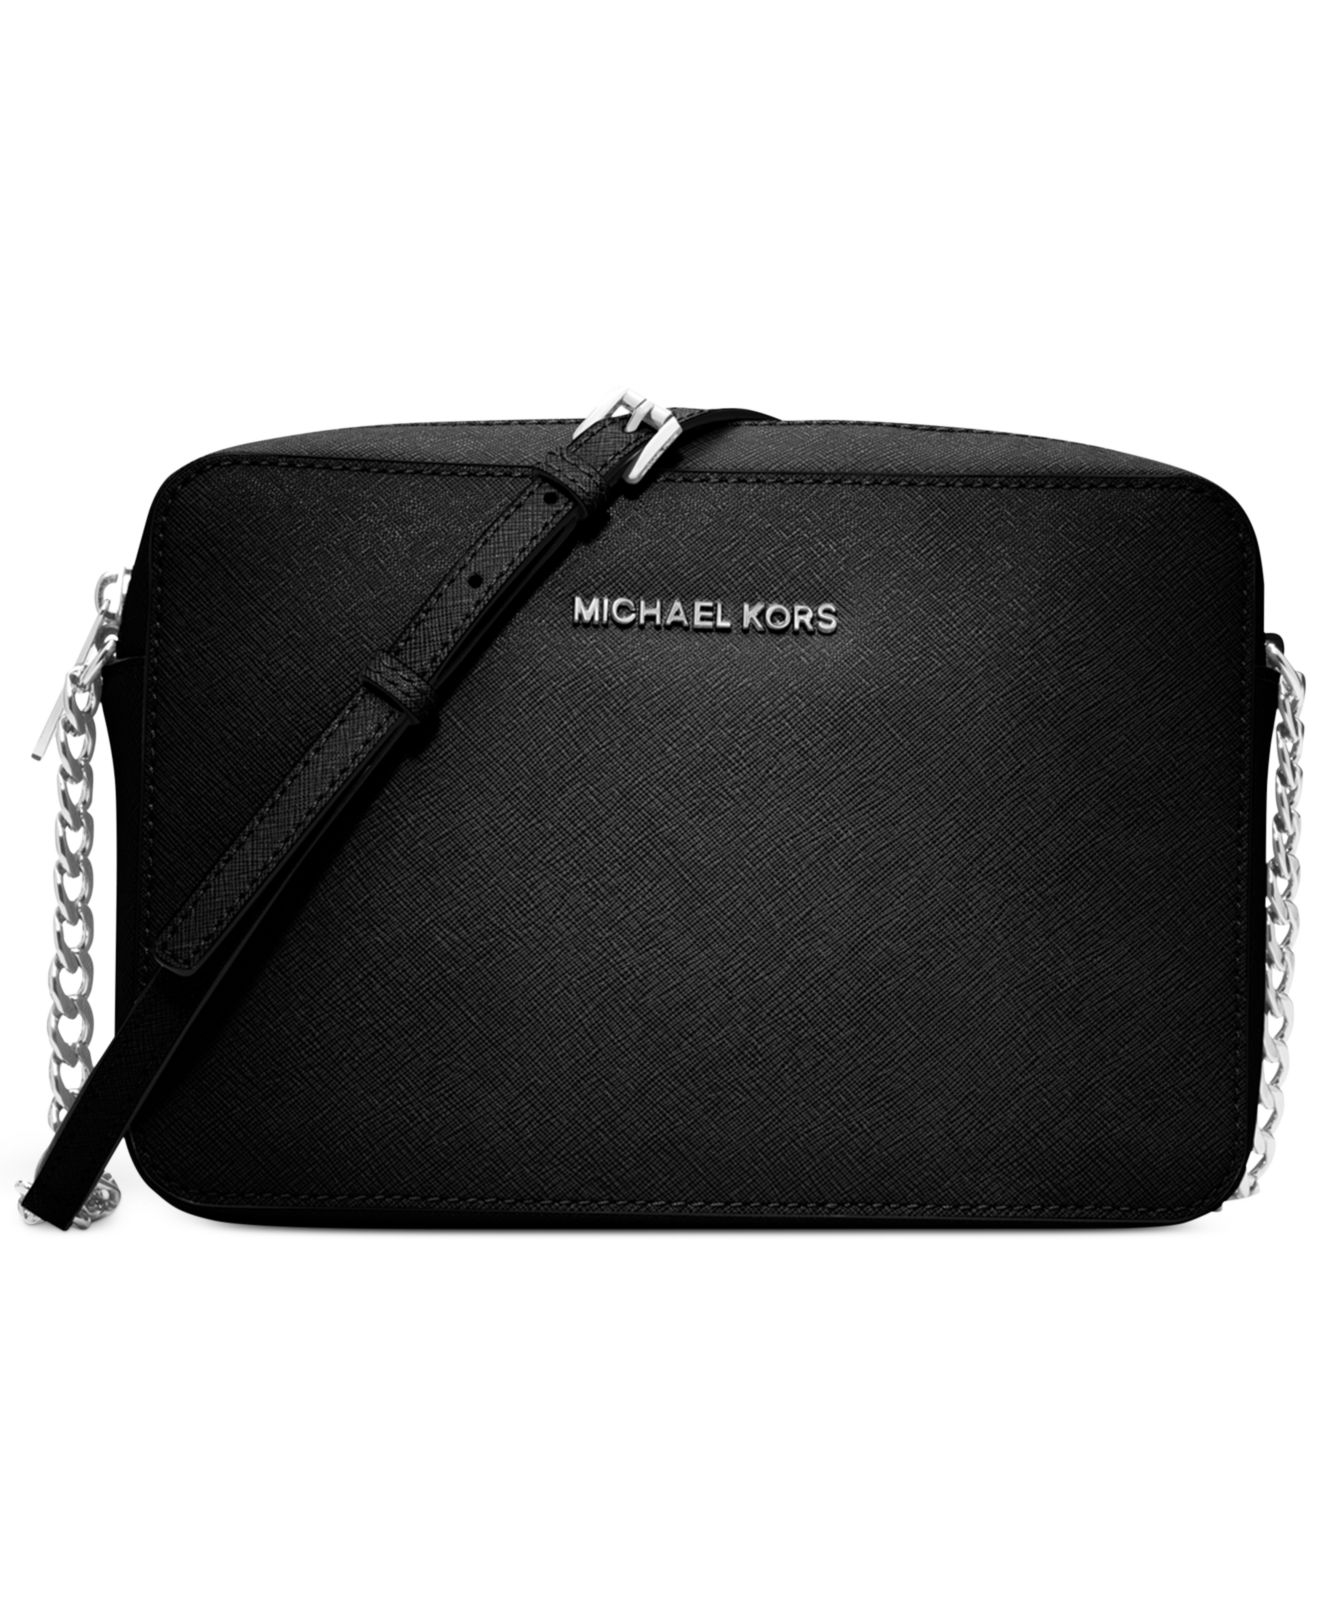 Michael Kors Black And Silver Bag Online, 58% OFF | www.dalmar.it